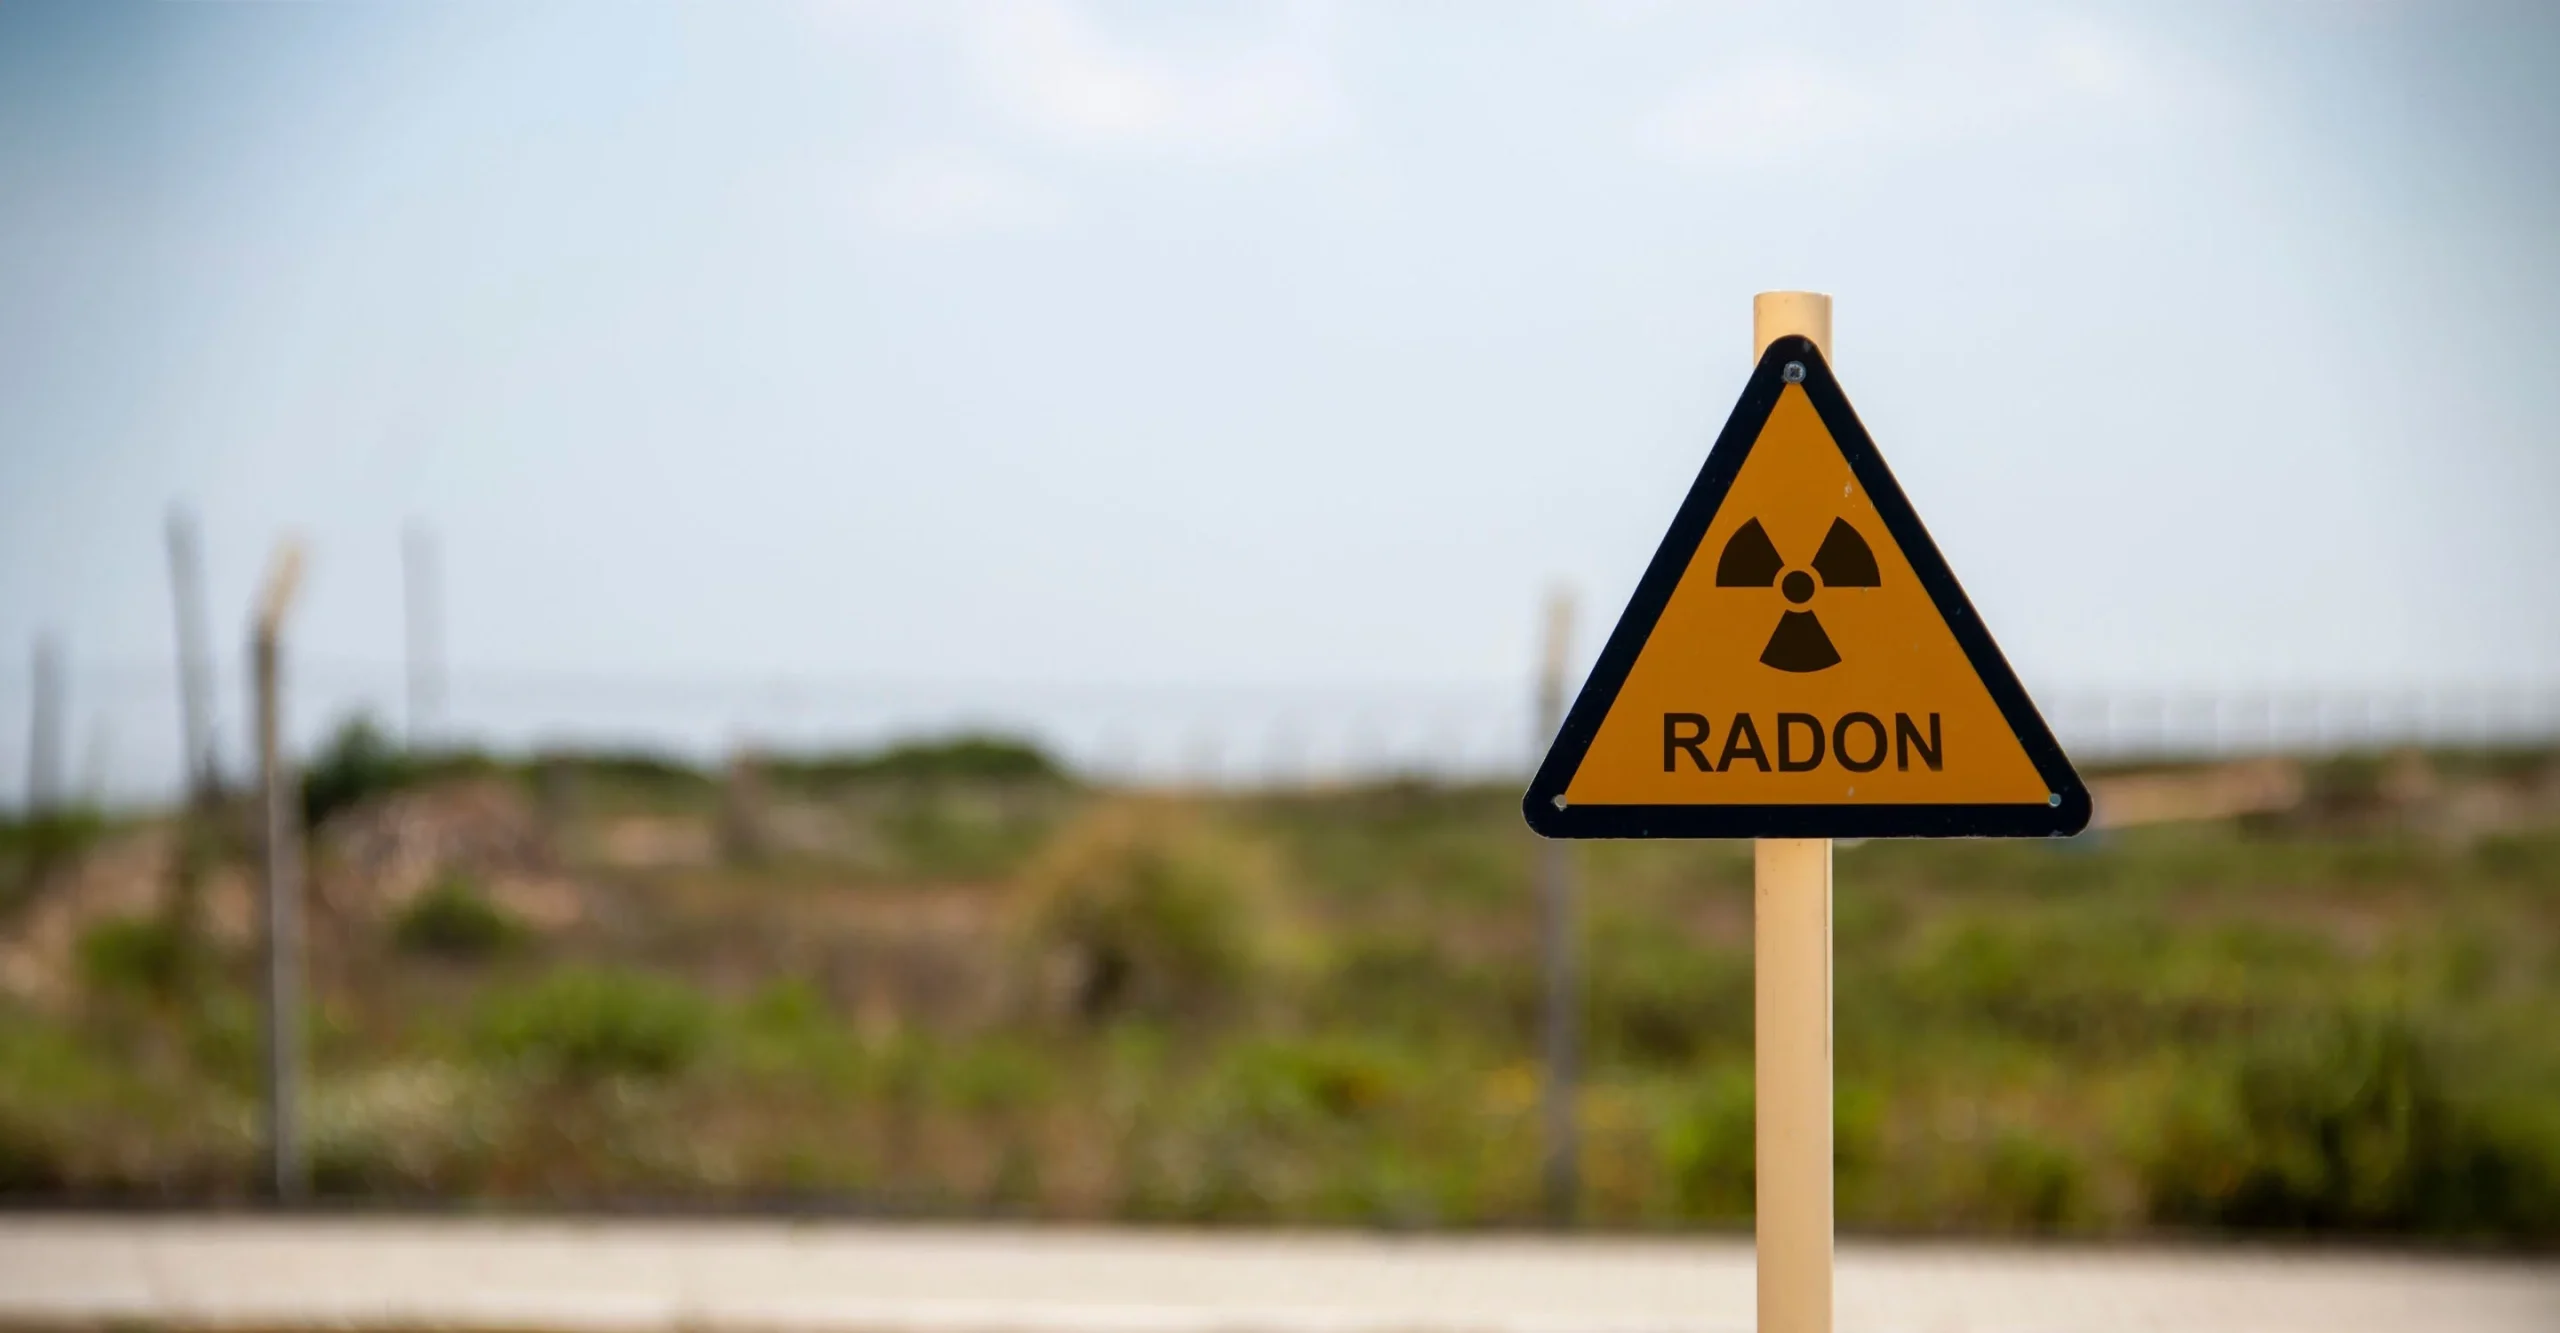 Should I Care About Radon